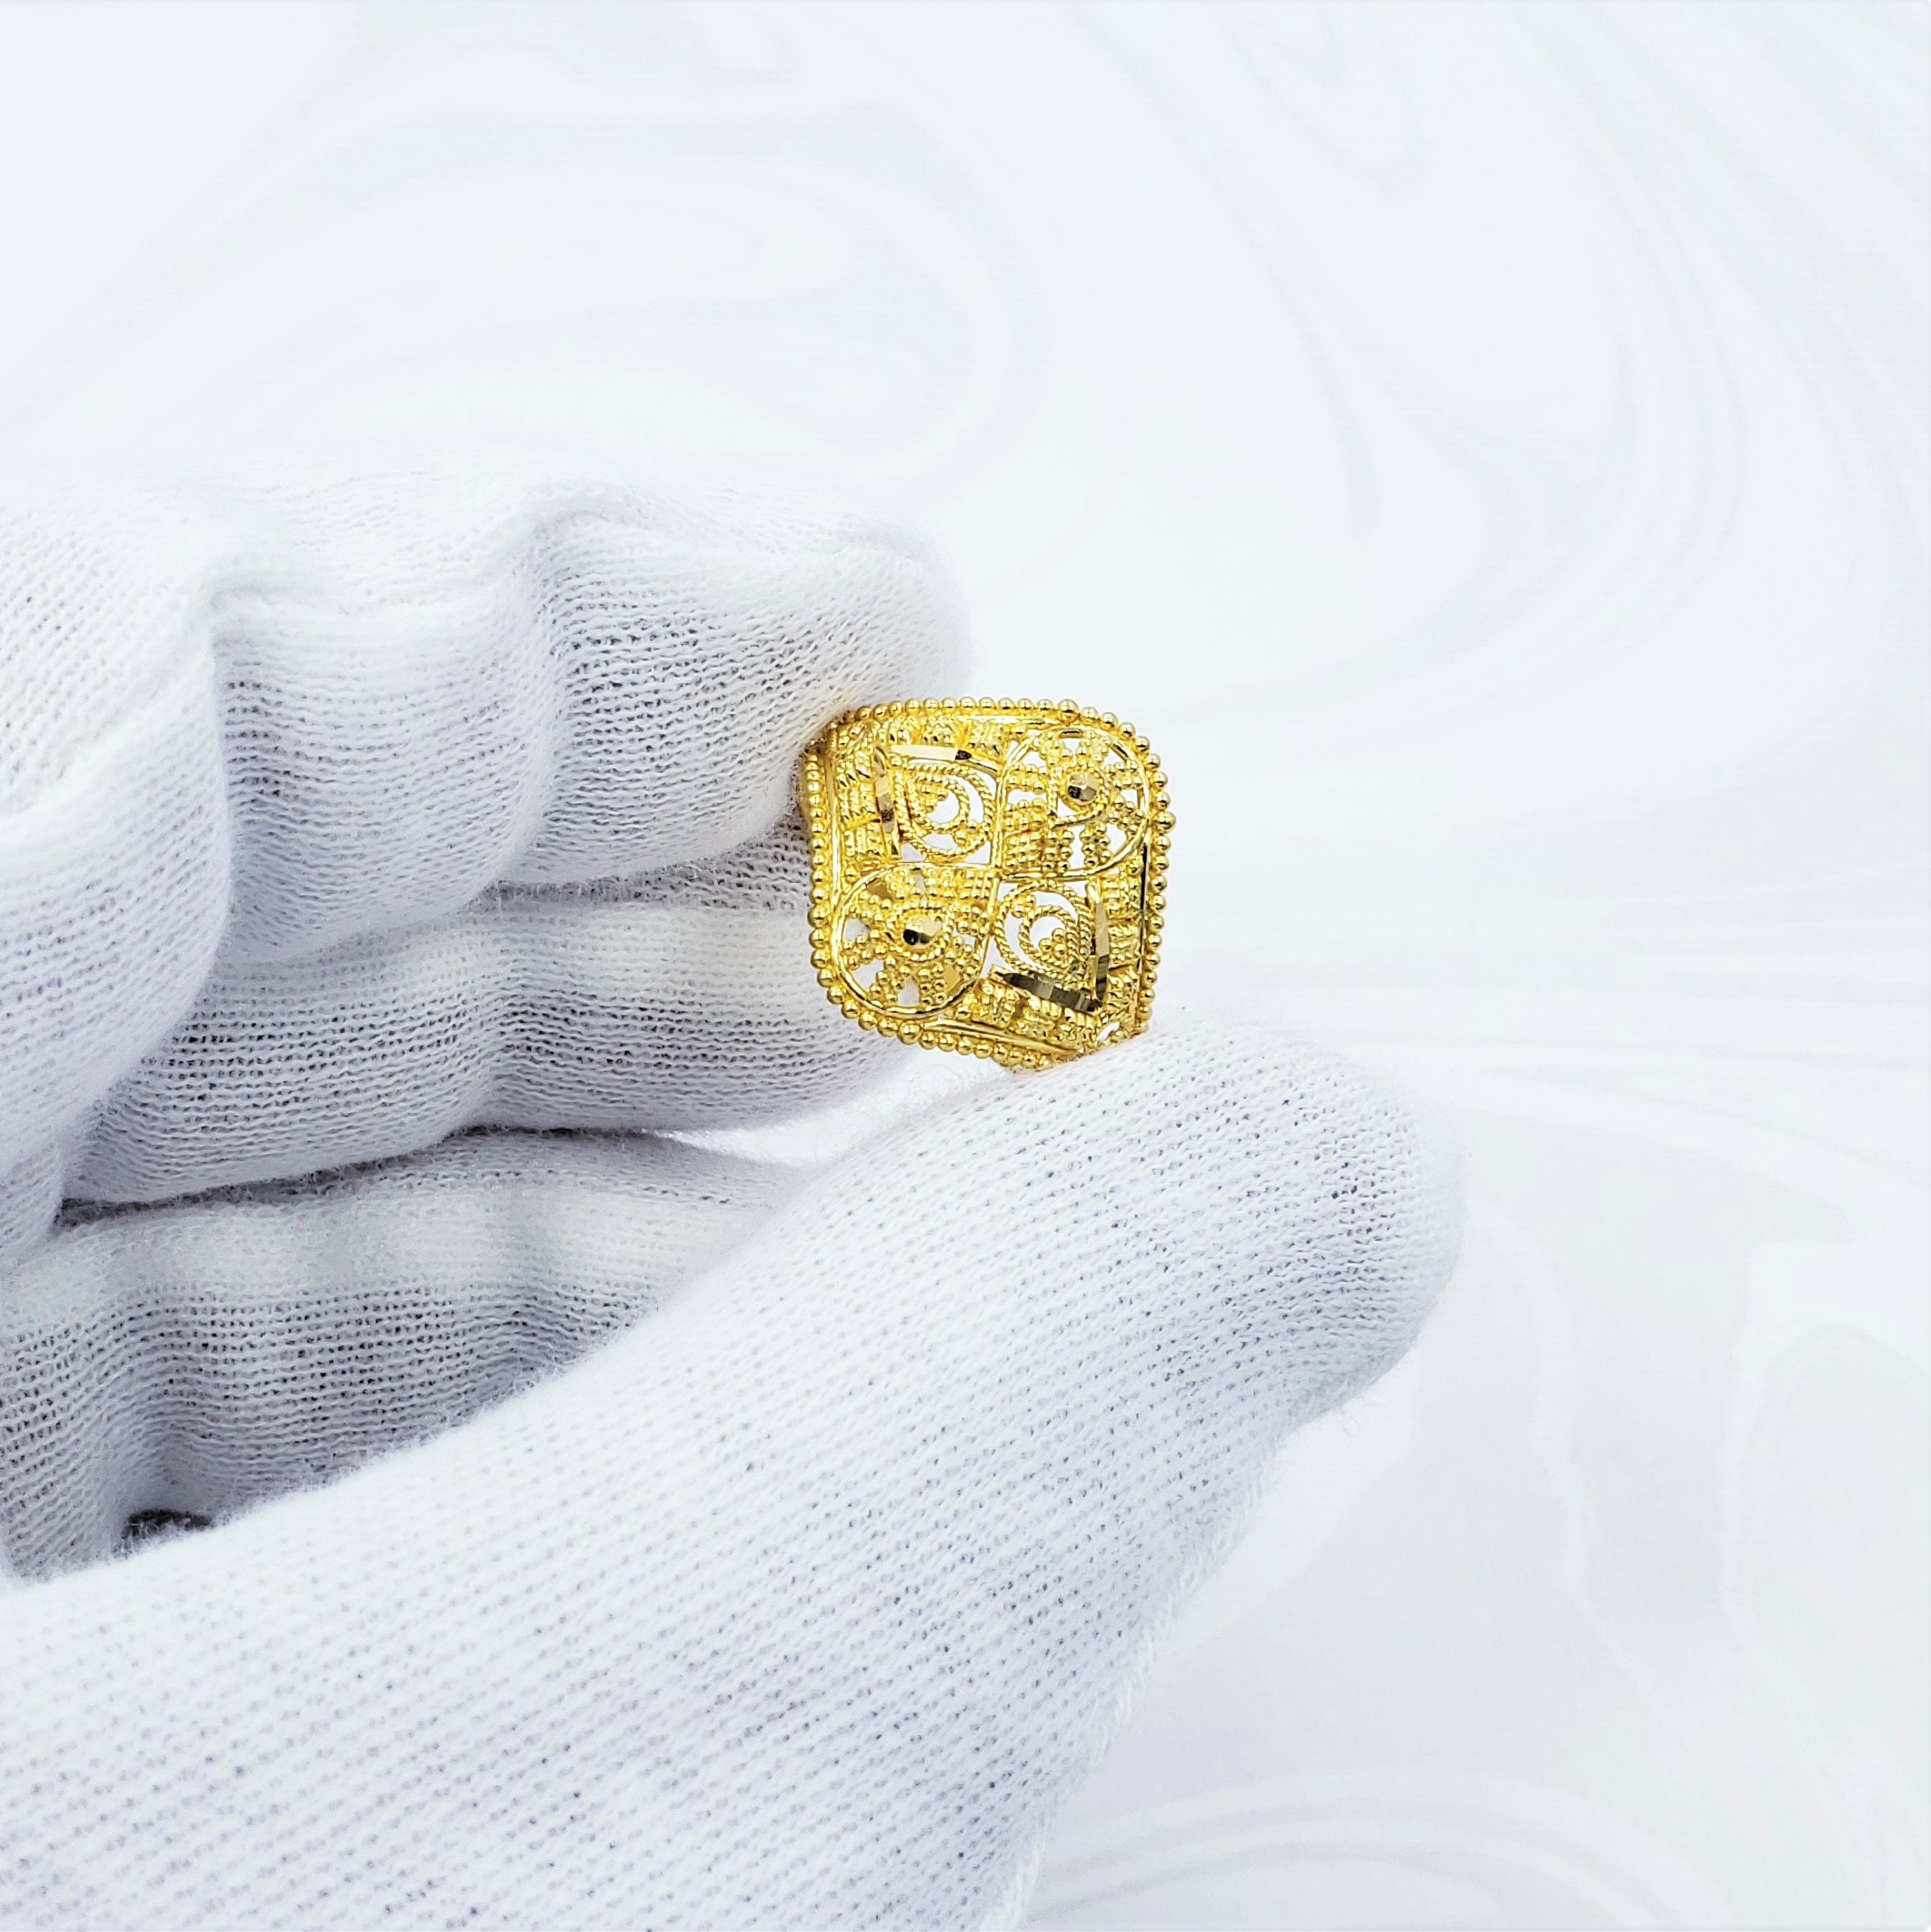 RING Genuine 22K Solid Gold Size US 7.5 Women Hallmark 916 | Etsy